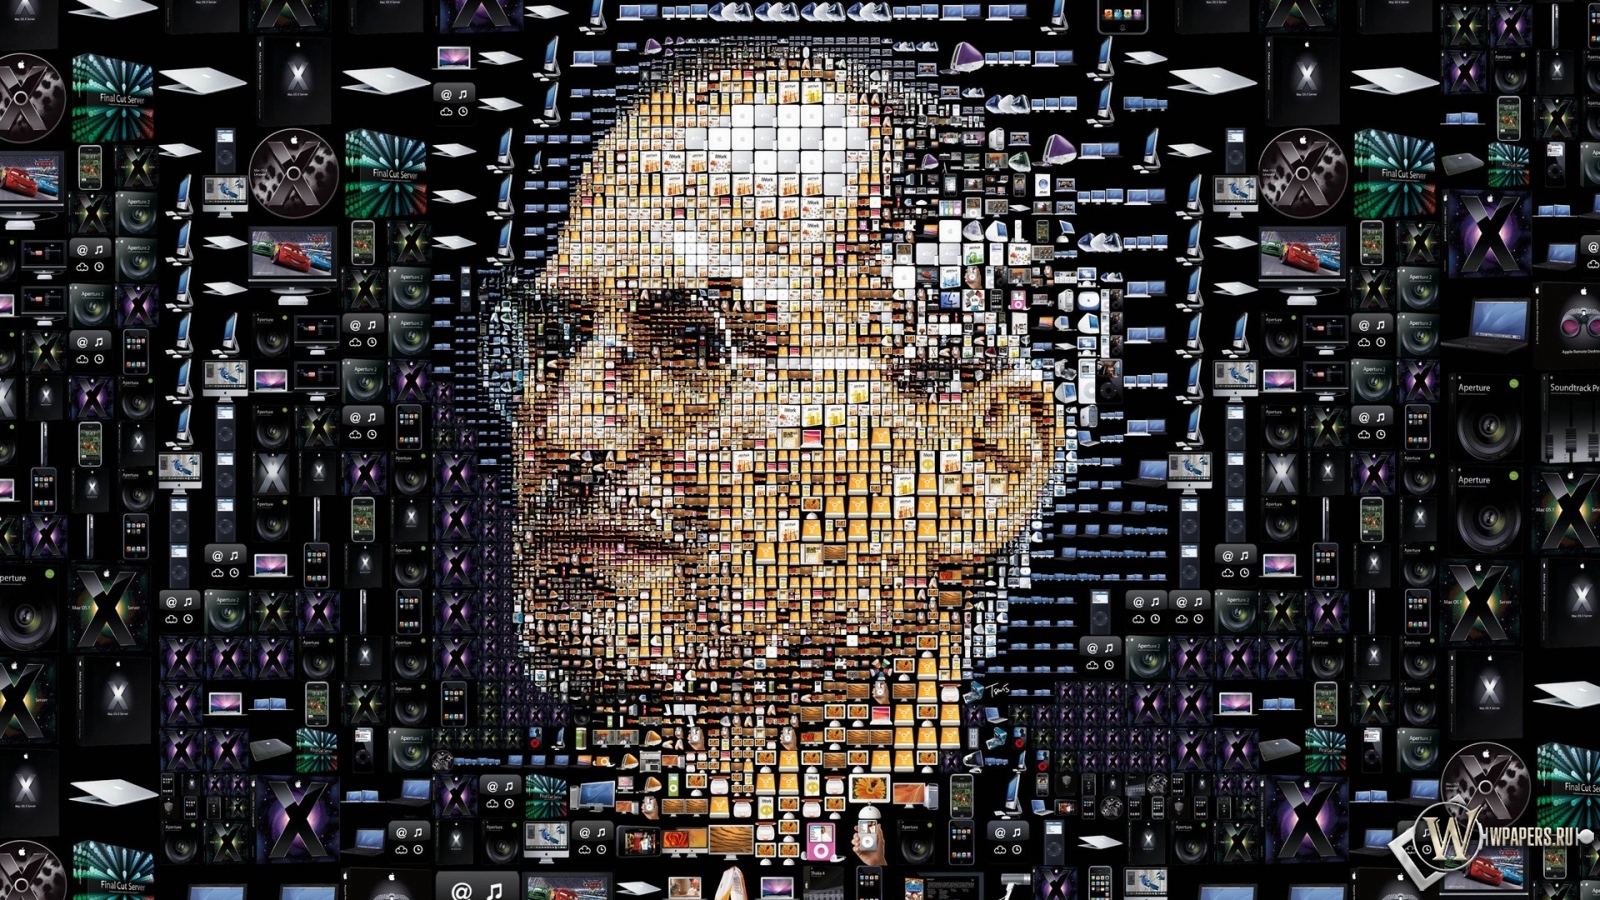 Steve Jobs 1600x900